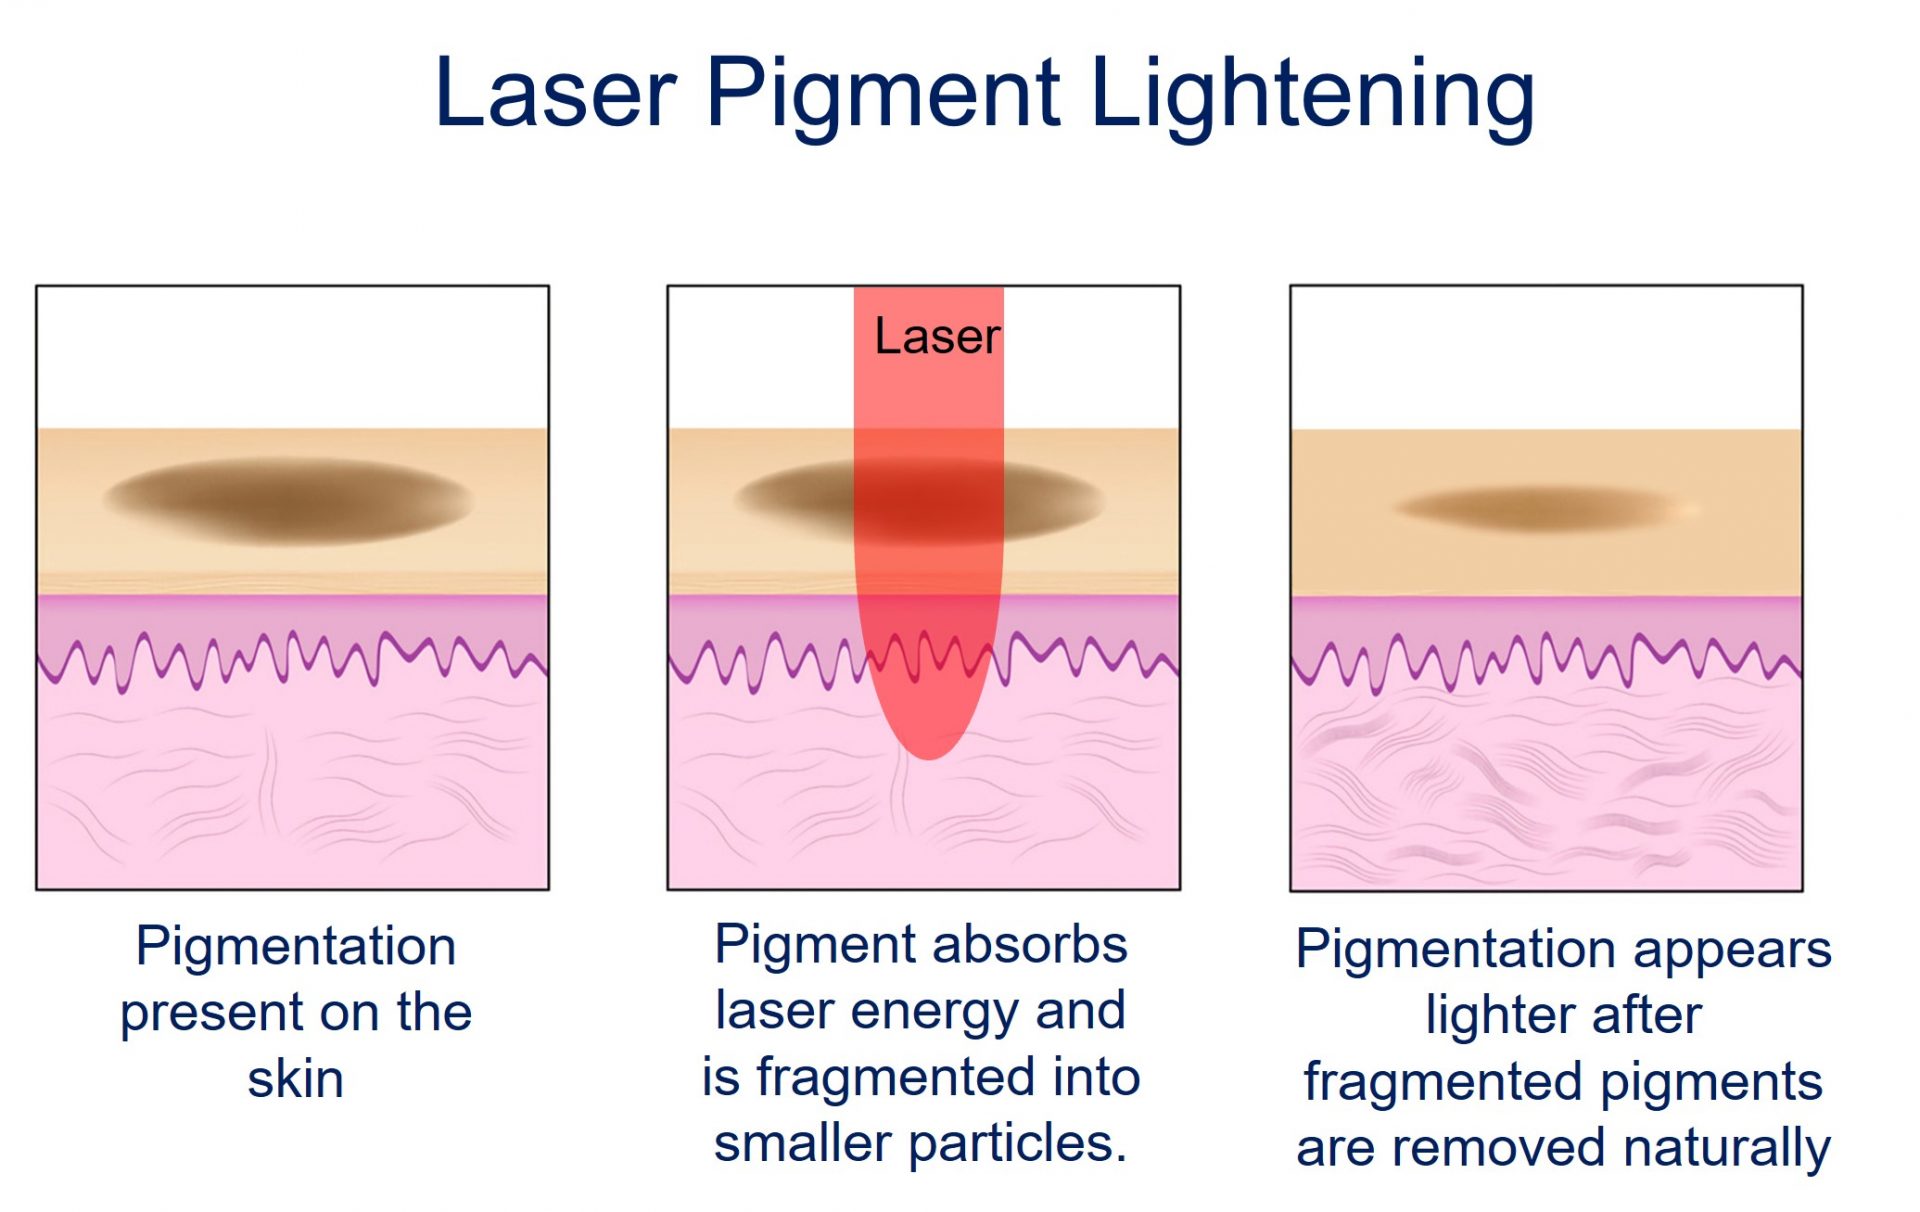 laser pigmentation lightening - how it works